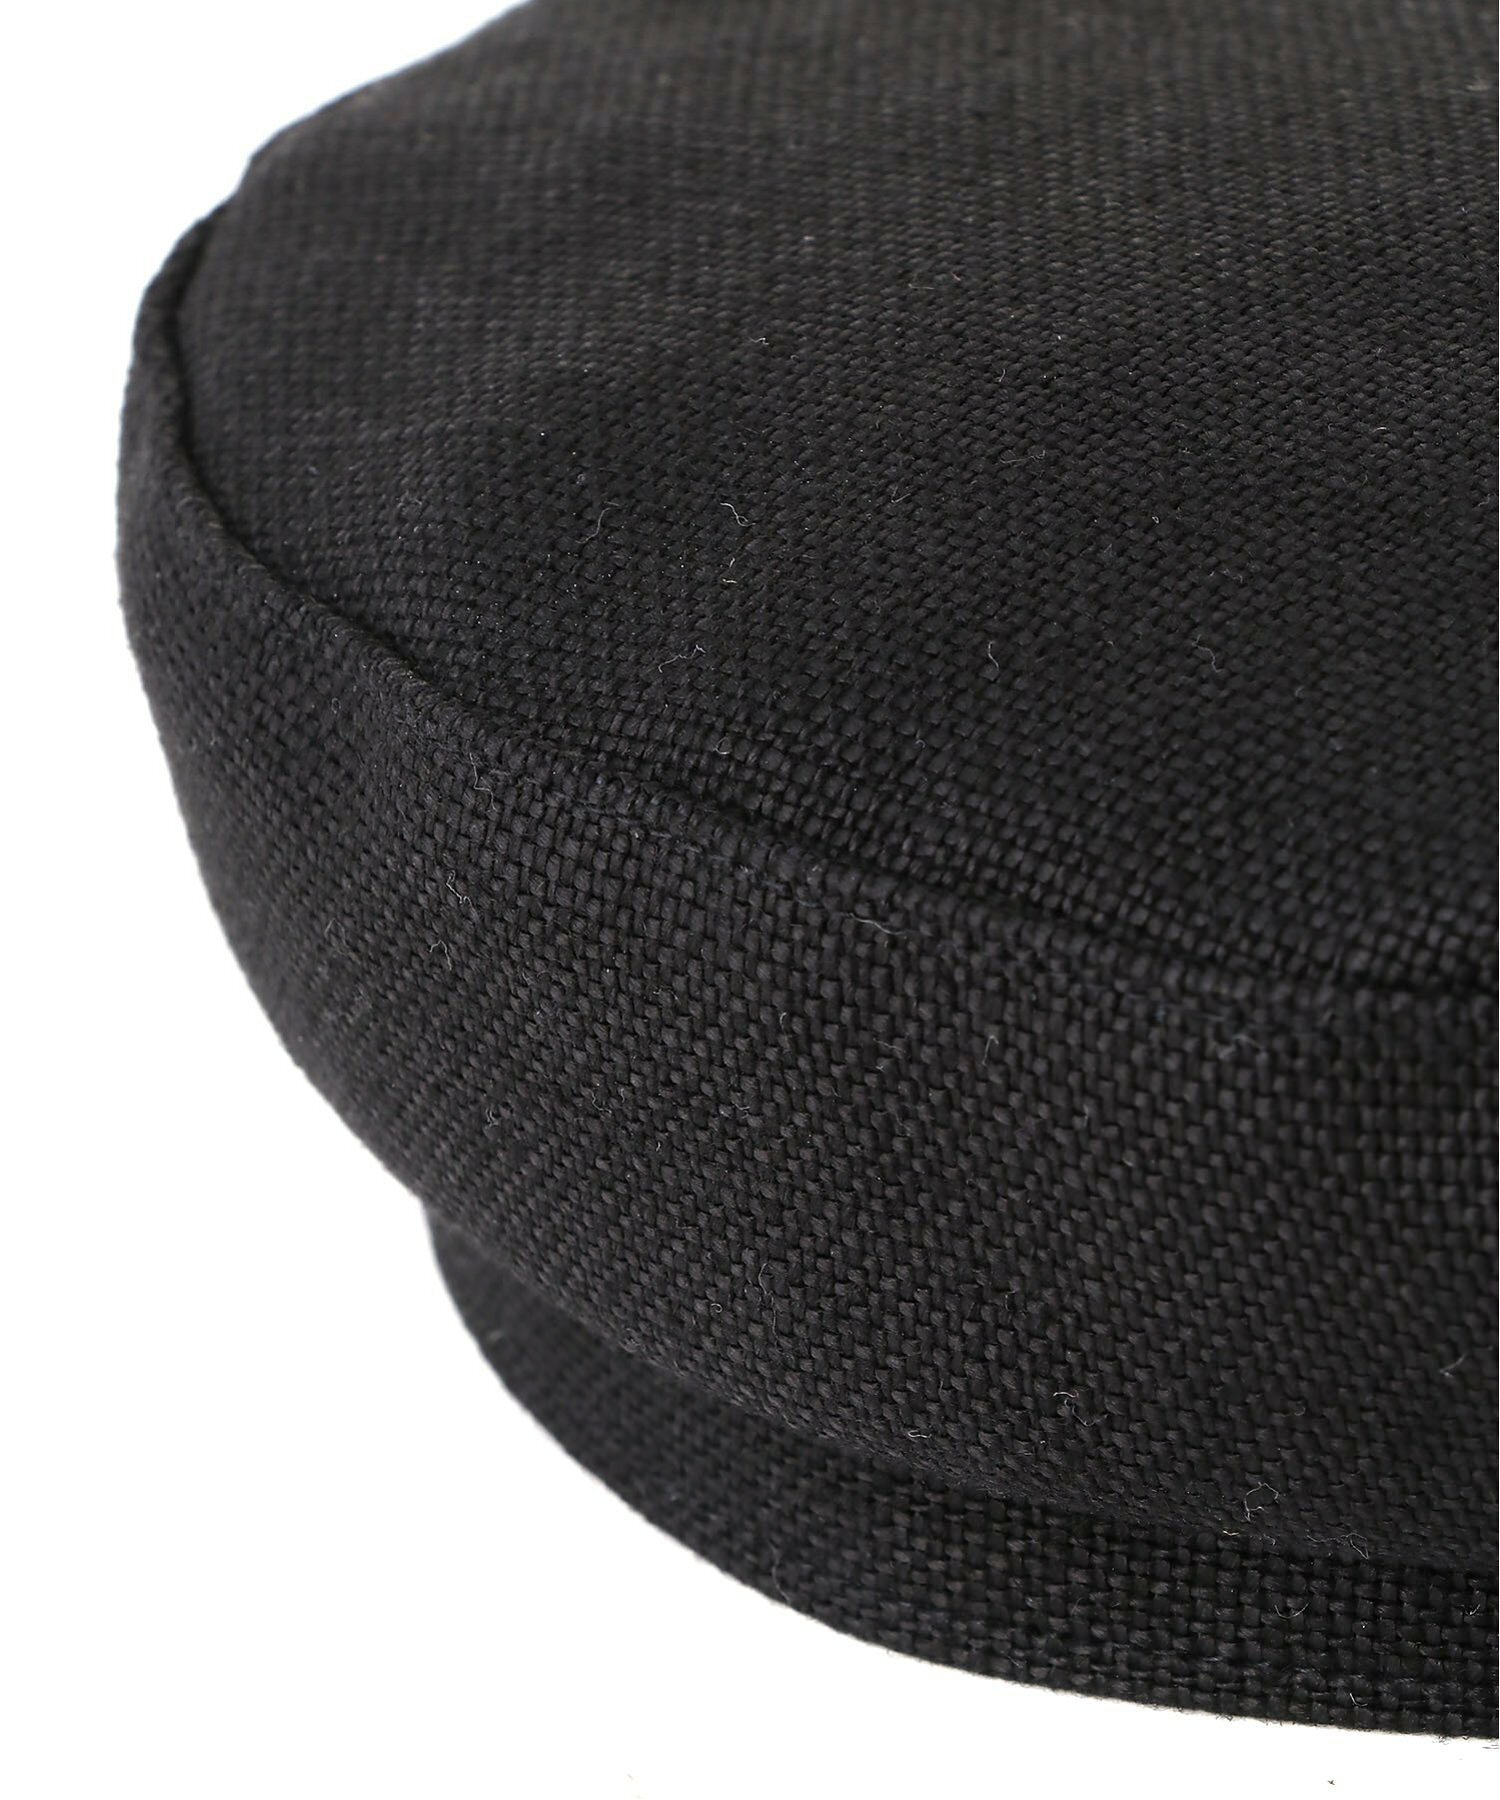 La Maison de Lyllis/(U)FISHERMAN BERET フィッシャーマンベレー ベレー帽 MADE IN JAPAN 日本製 ラメゾンドリリス 2241016